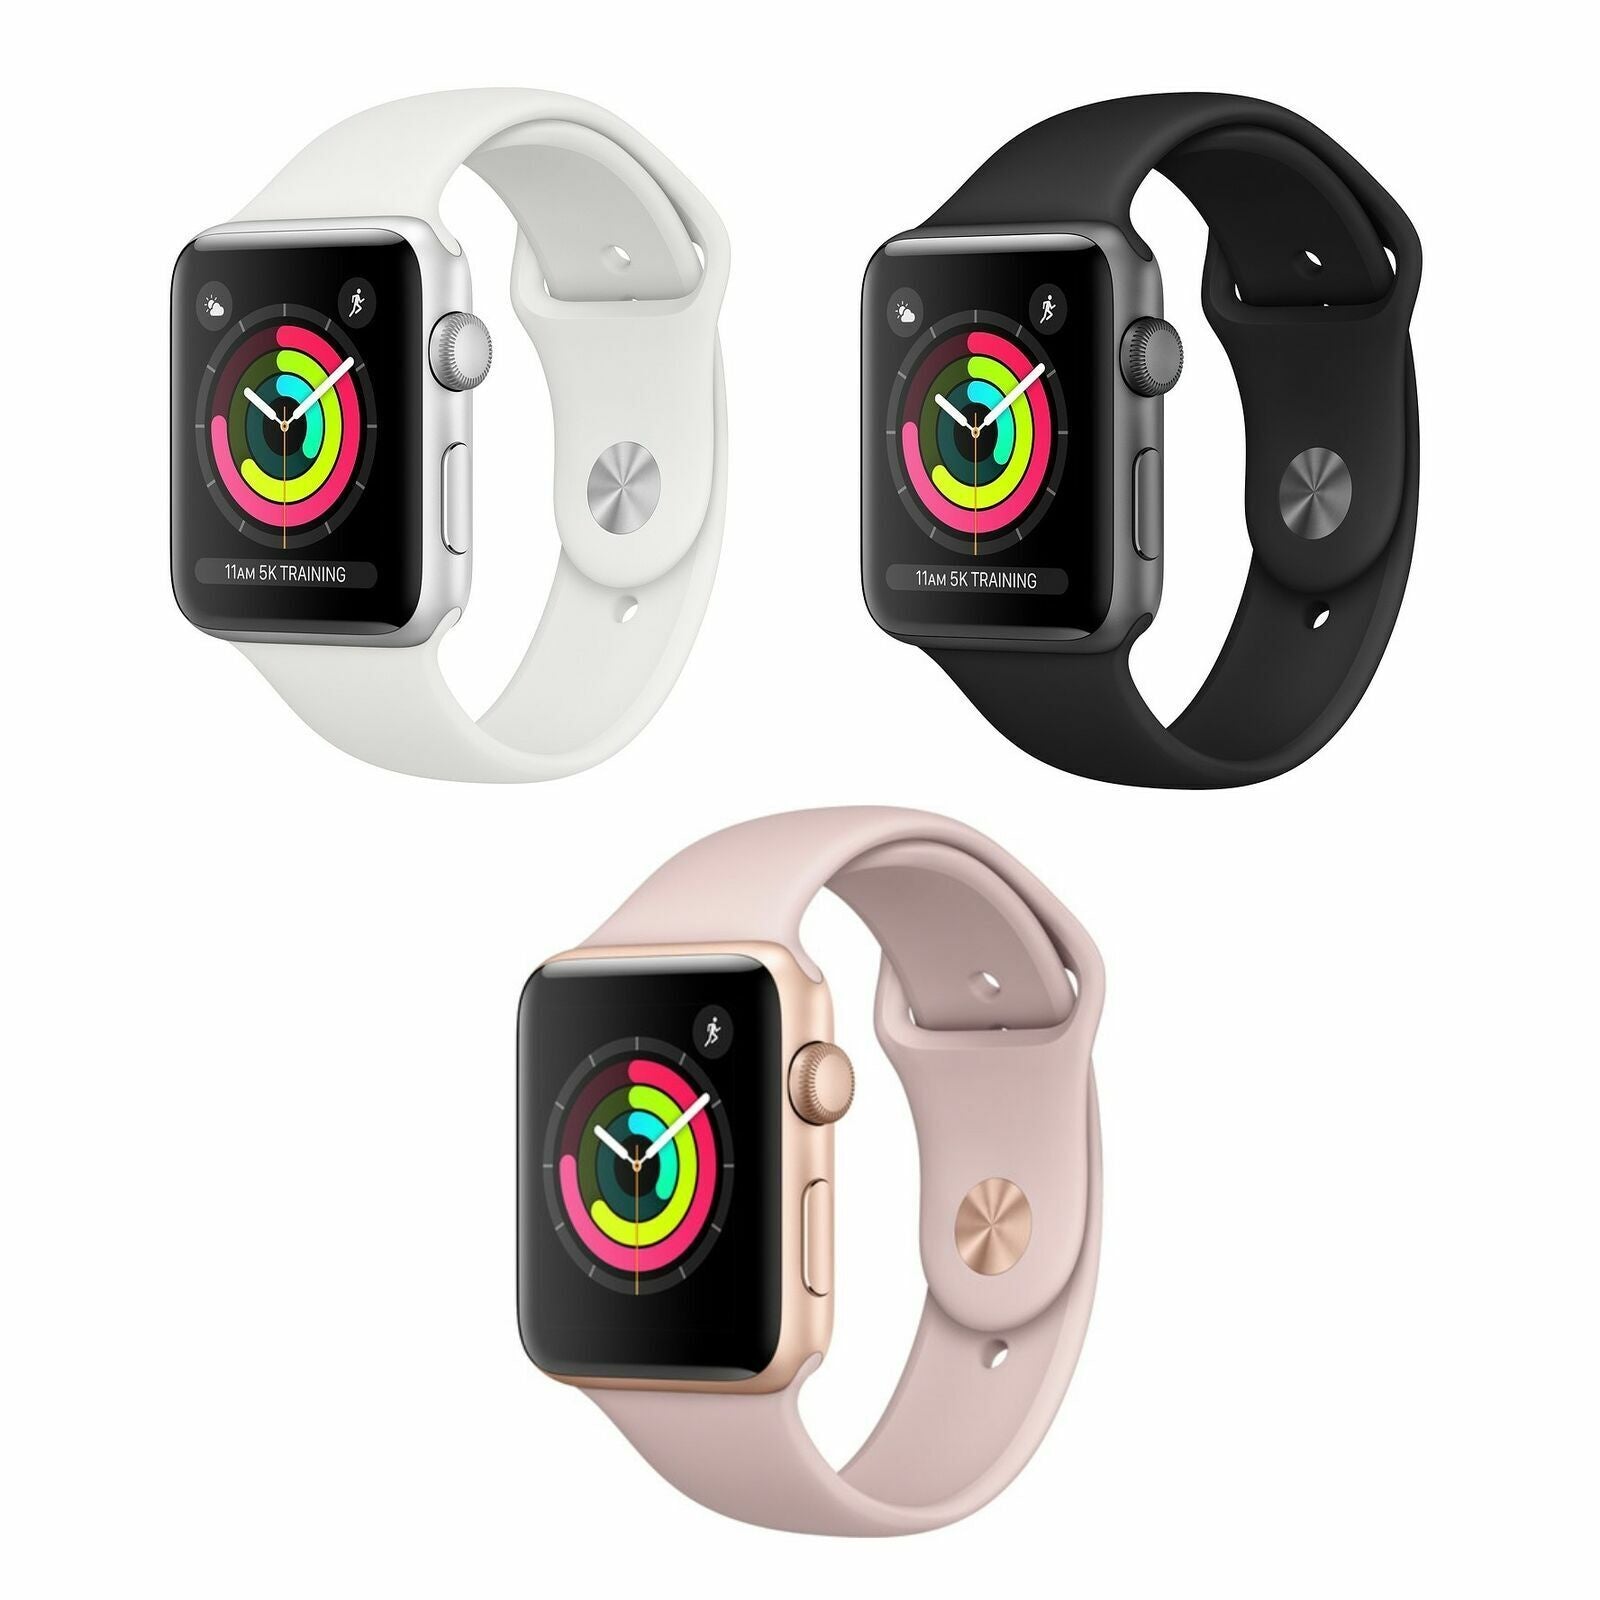 Apple Watch Series 3 | A1861 | 42MM | Cellular